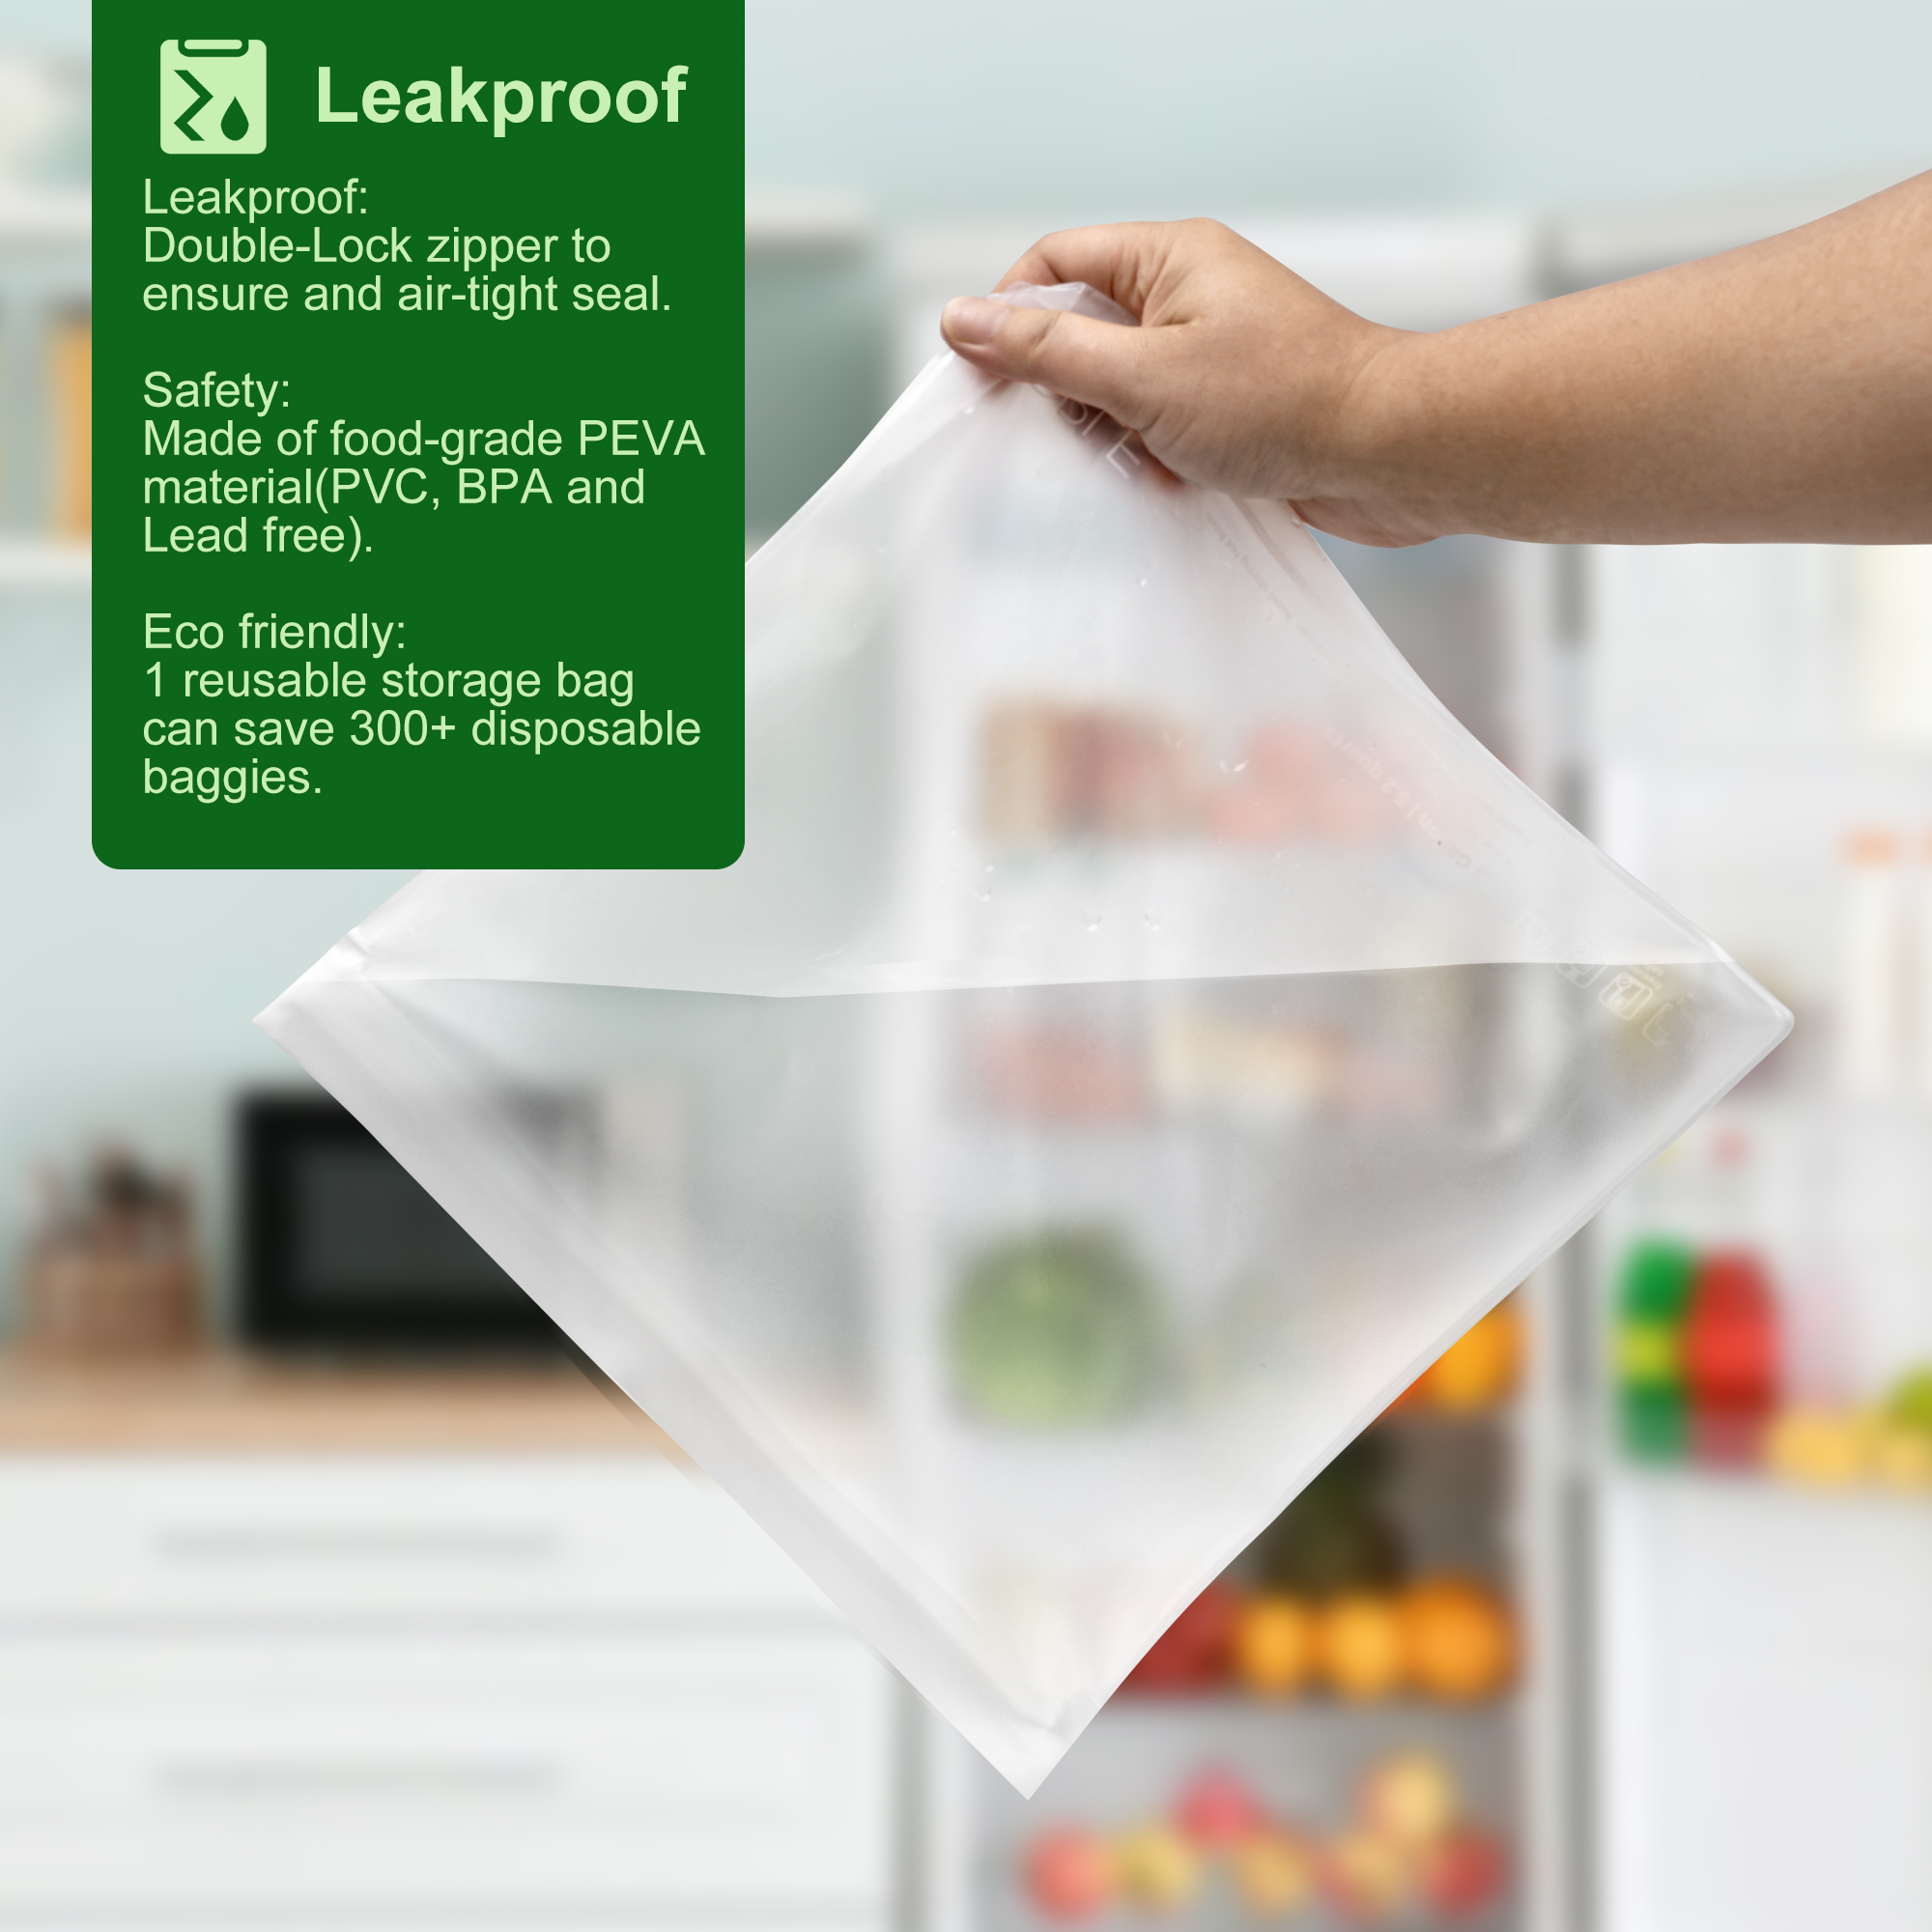 Reusable Food Storage Bags - 12 Count BPA Free Reusable Freezer Bags (2  Gallon & 5 Sandwich & 5 Snack Size Bags) Leak Proof Freezer Safe Bag for  Meat Fruit Vegetable 